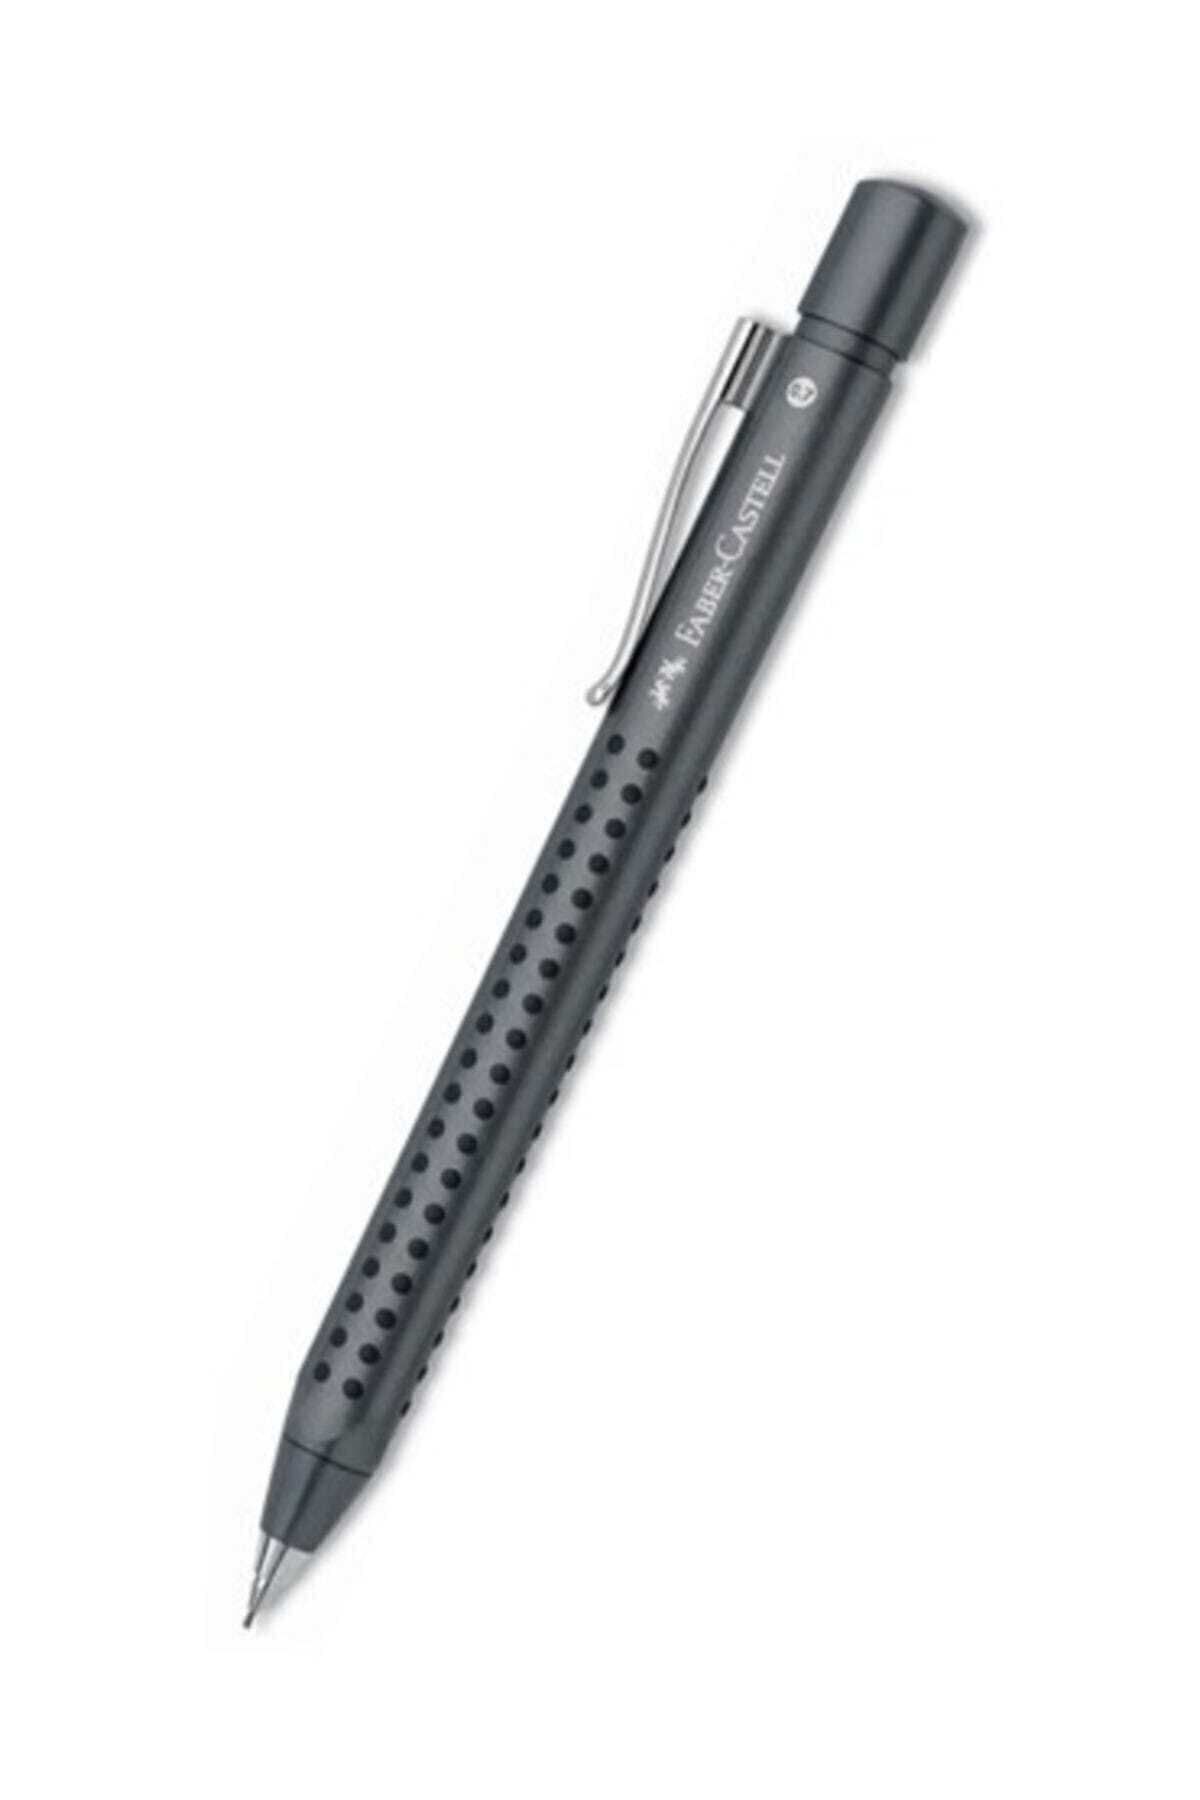 Faber Castell Grip 2011 Versatil 0.7mm Black